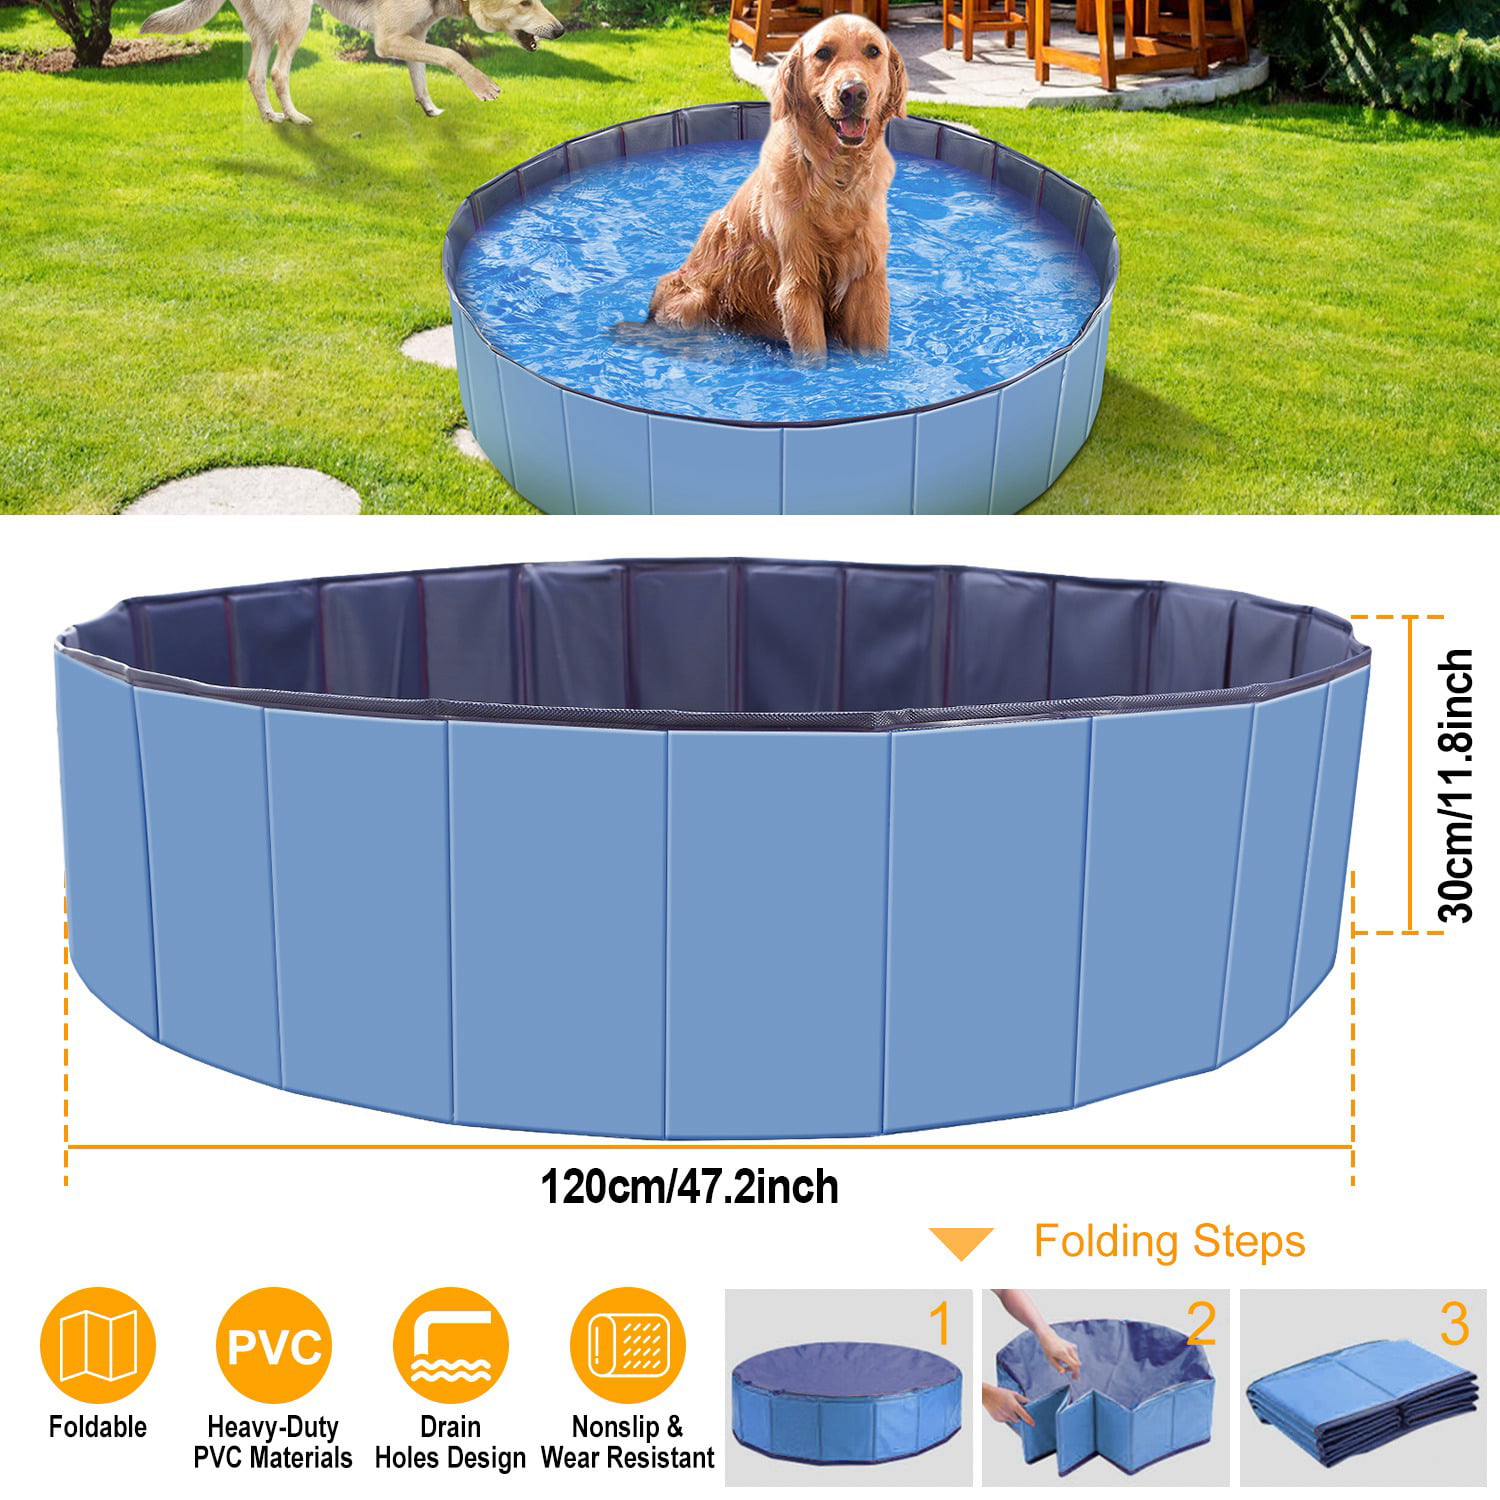 Kocaso Foldable Dog Pet Bath Pool, Collapsible Dog Pet Pool Bathing Tub Pool, Blue - image 1 of 7